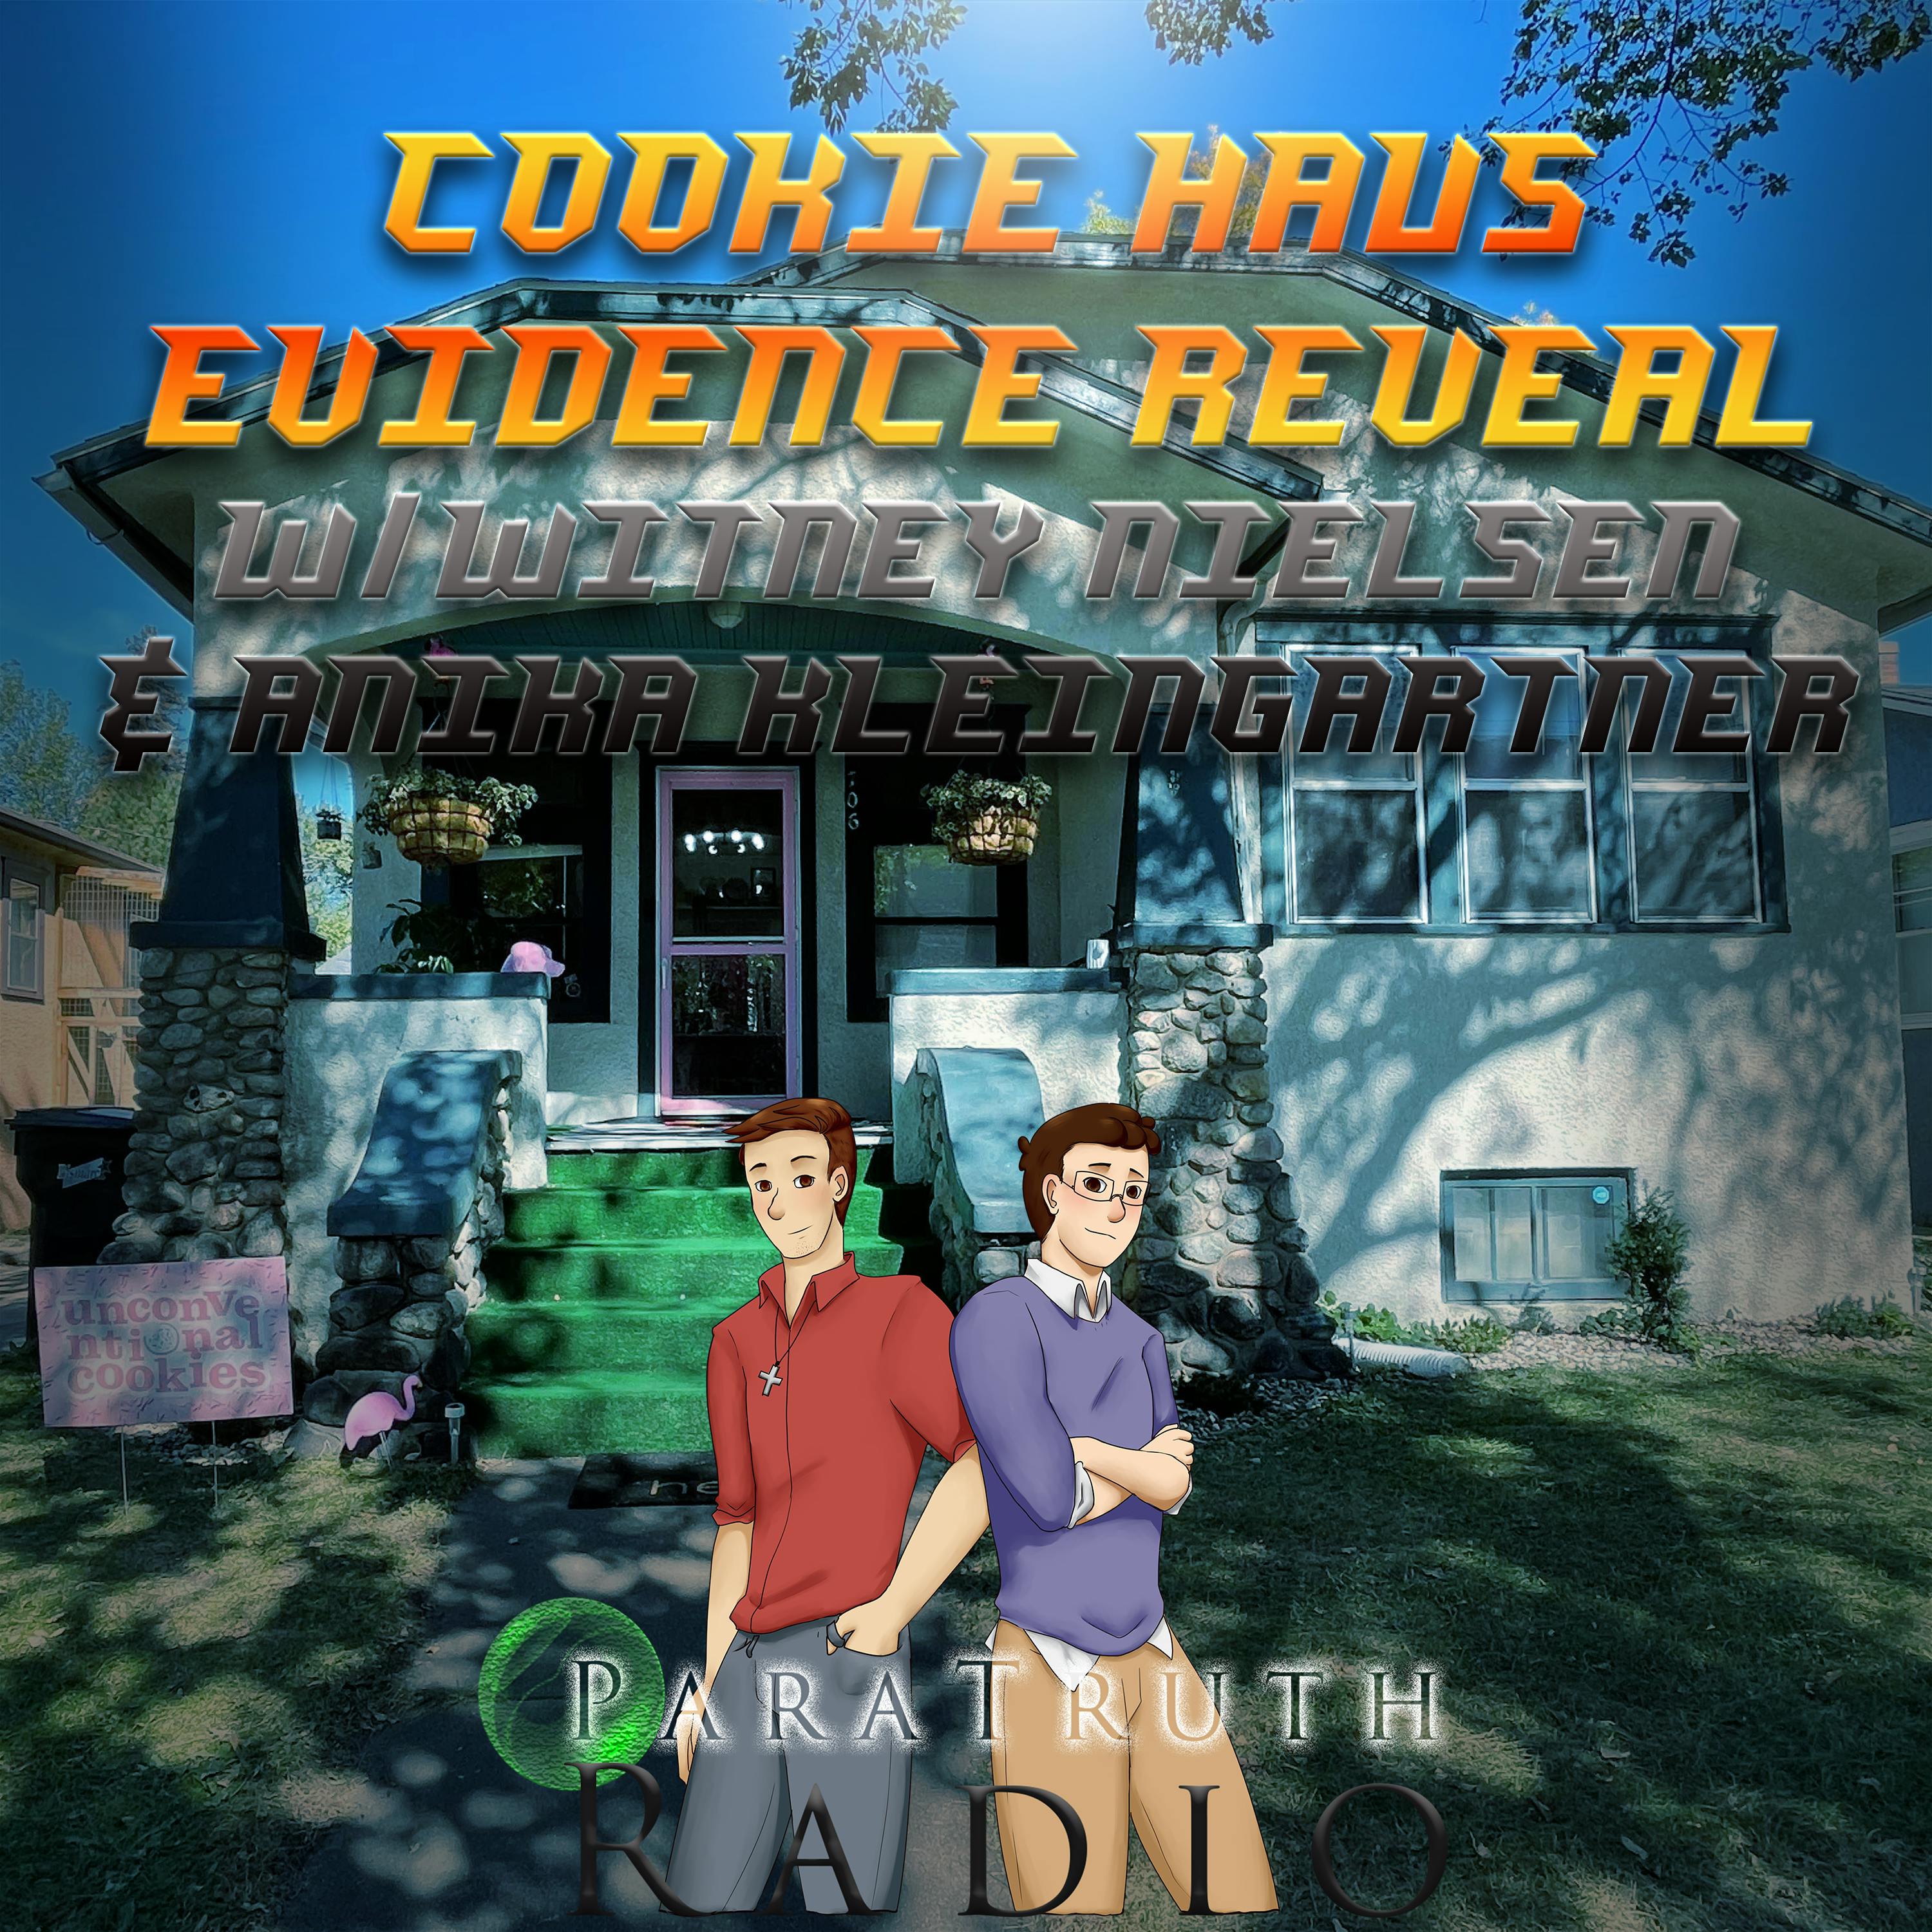 Cookie Haus Evidence Reveal w/Witney Nielsen and Anika Kleingartner Image